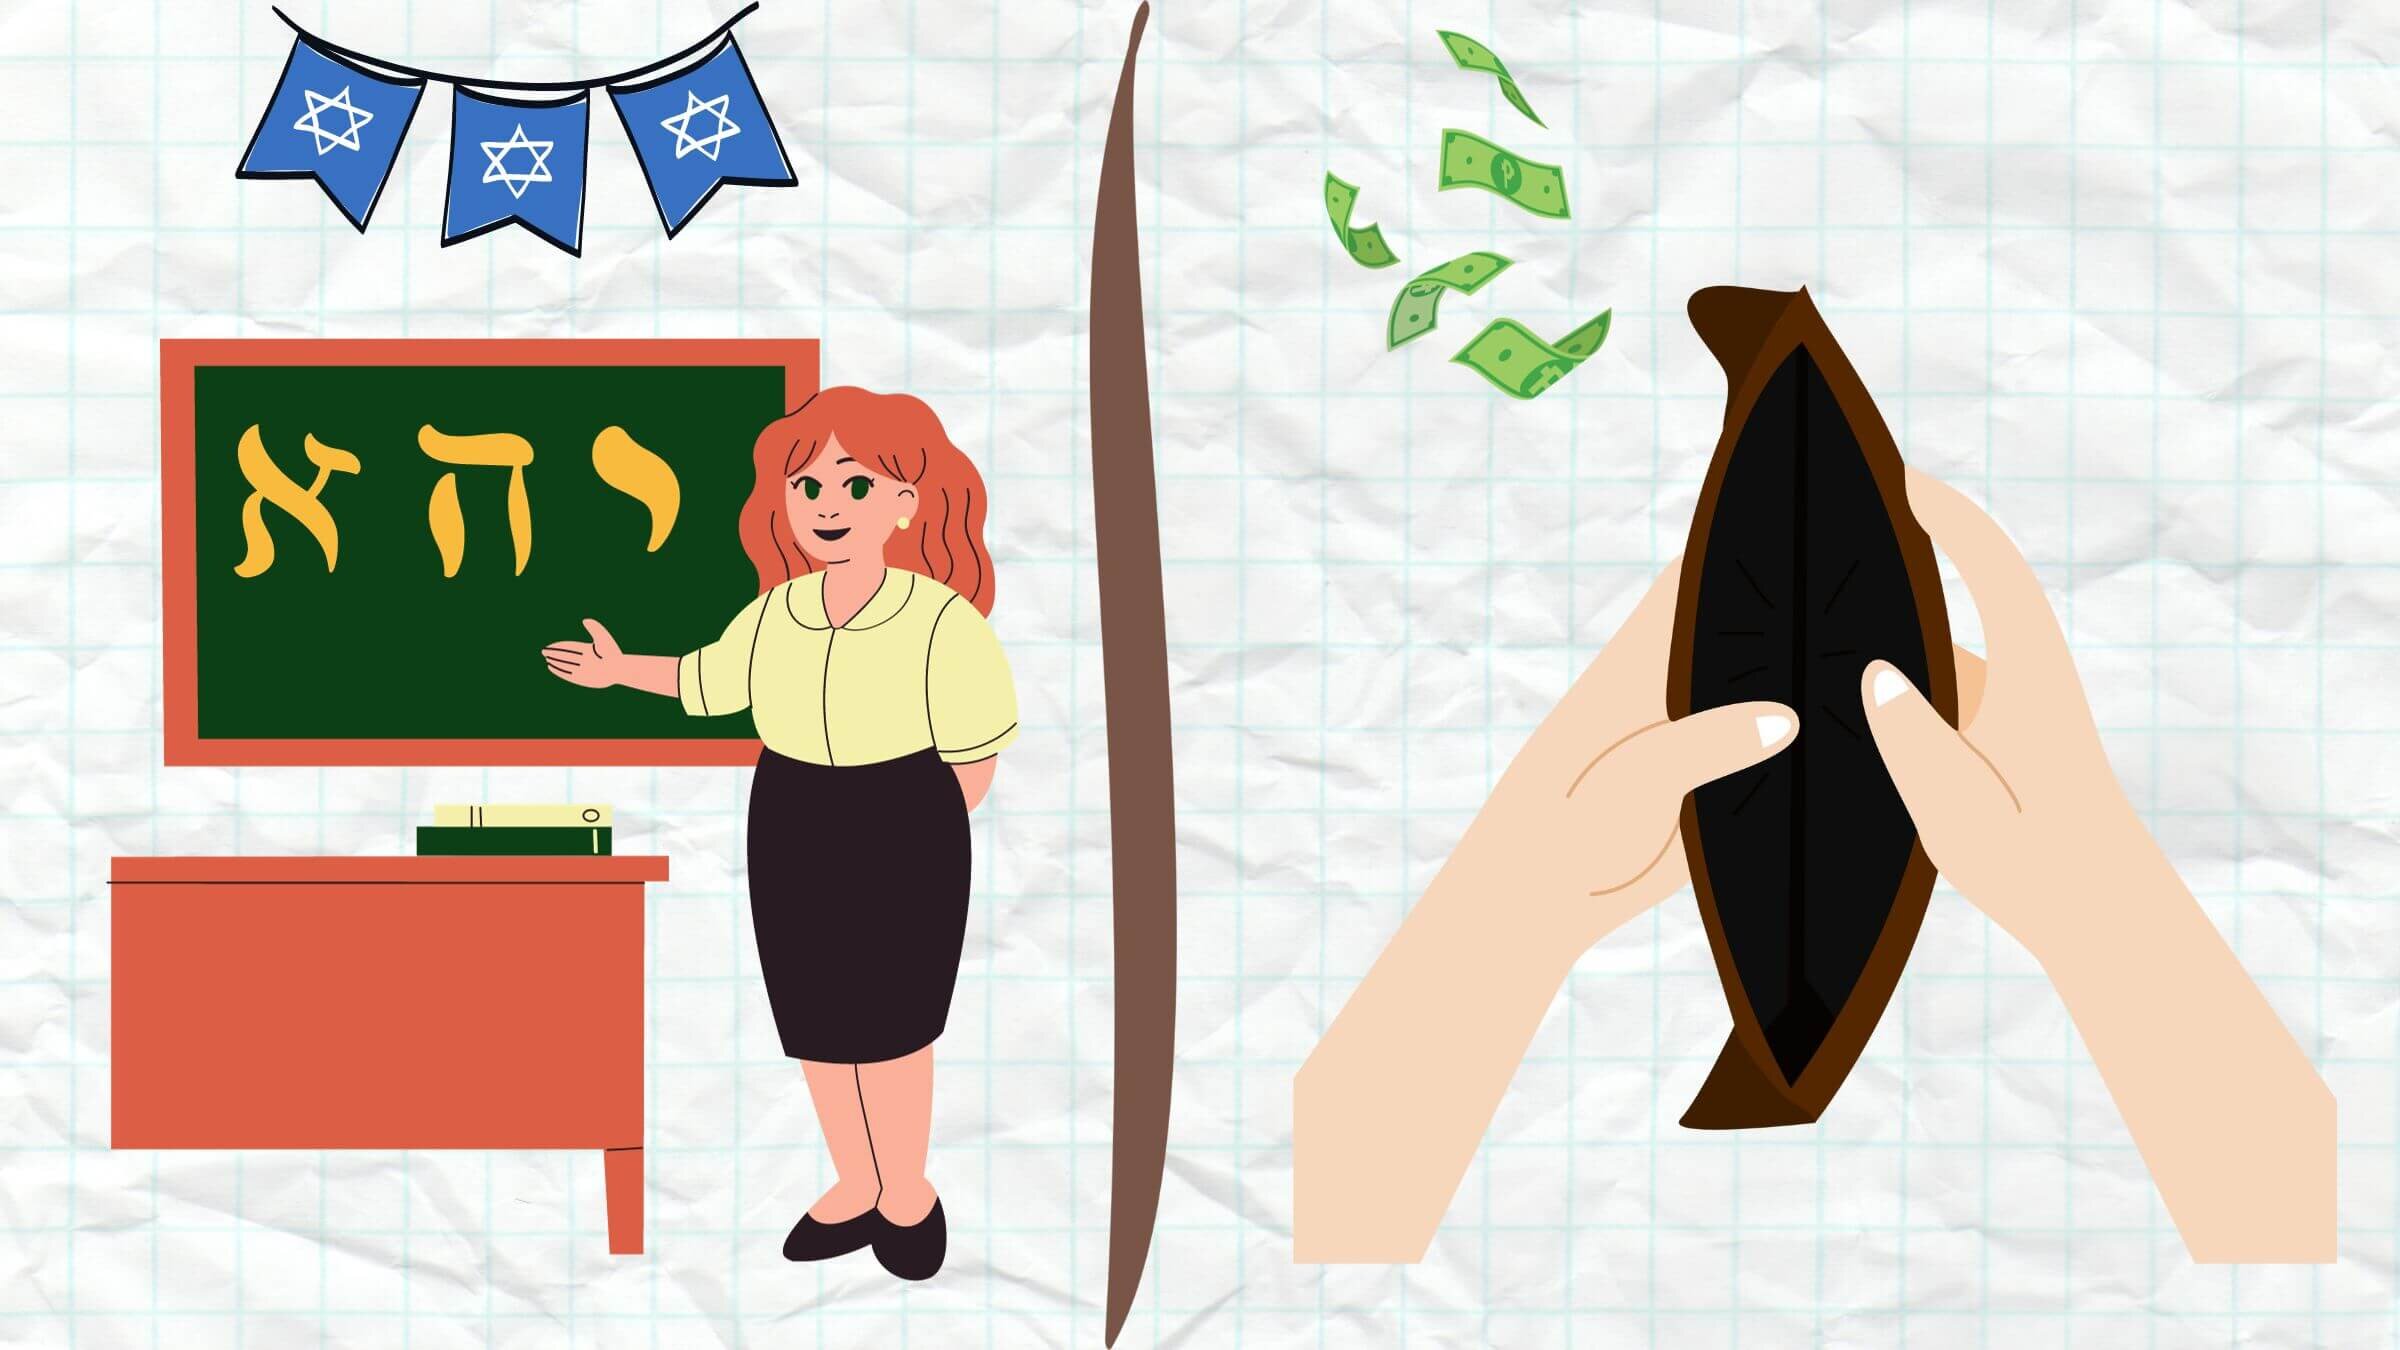 Many Jewish day school teachers are living in financial precarity.